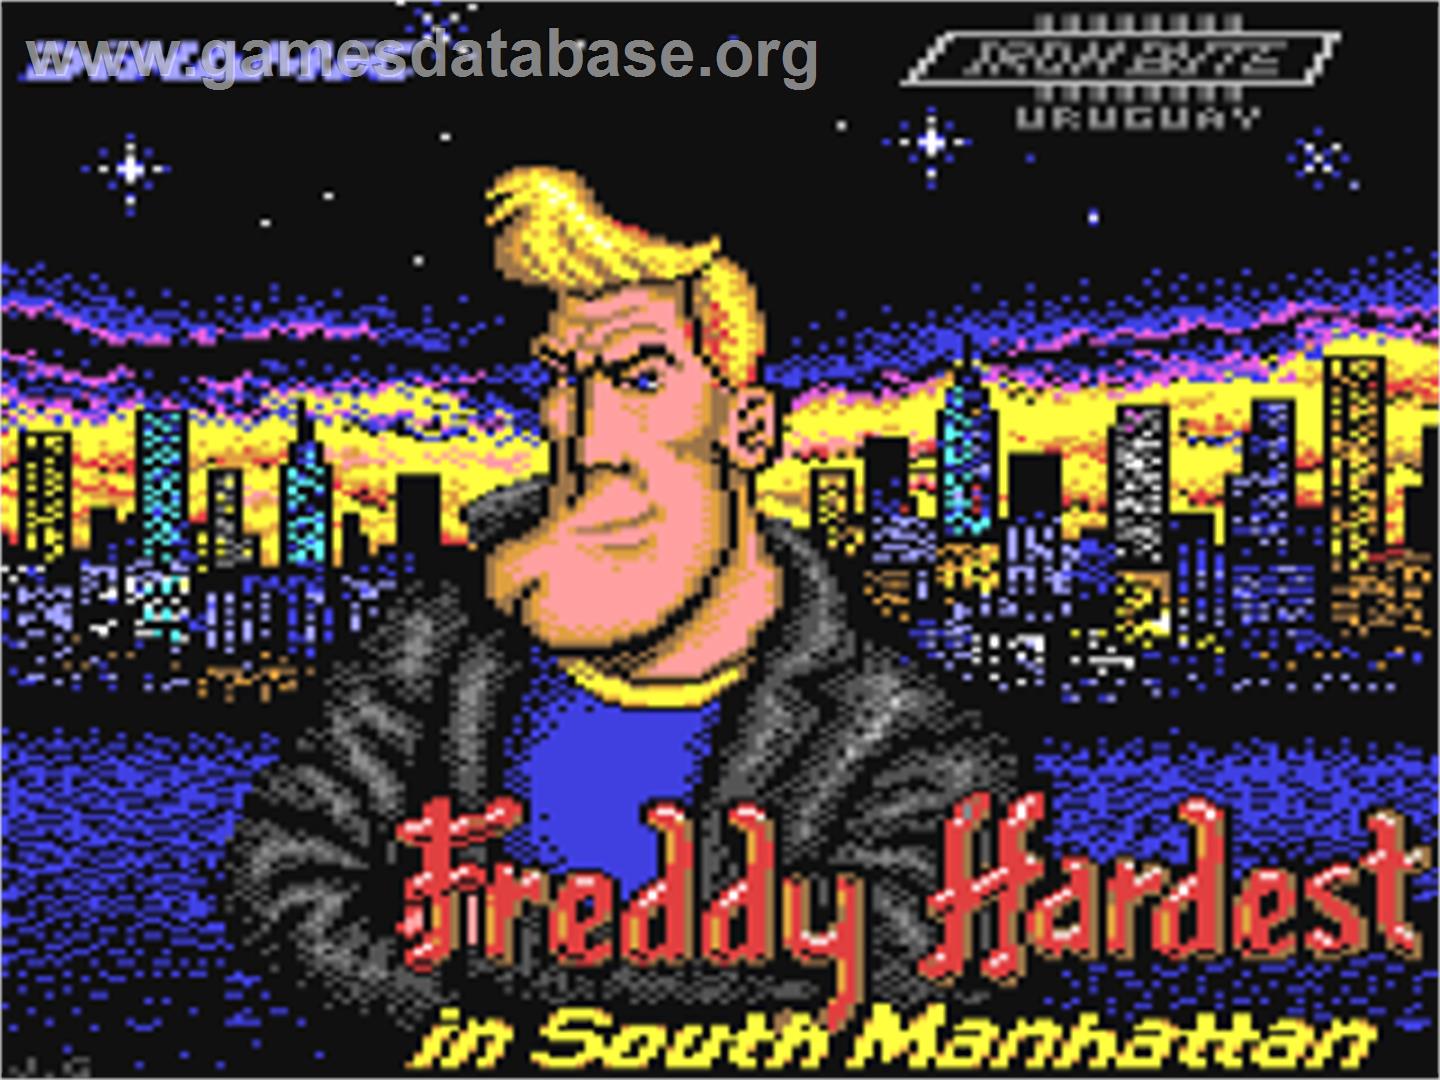 Freddy Hardest in South Manhattan - Commodore 64 - Artwork - Title Screen